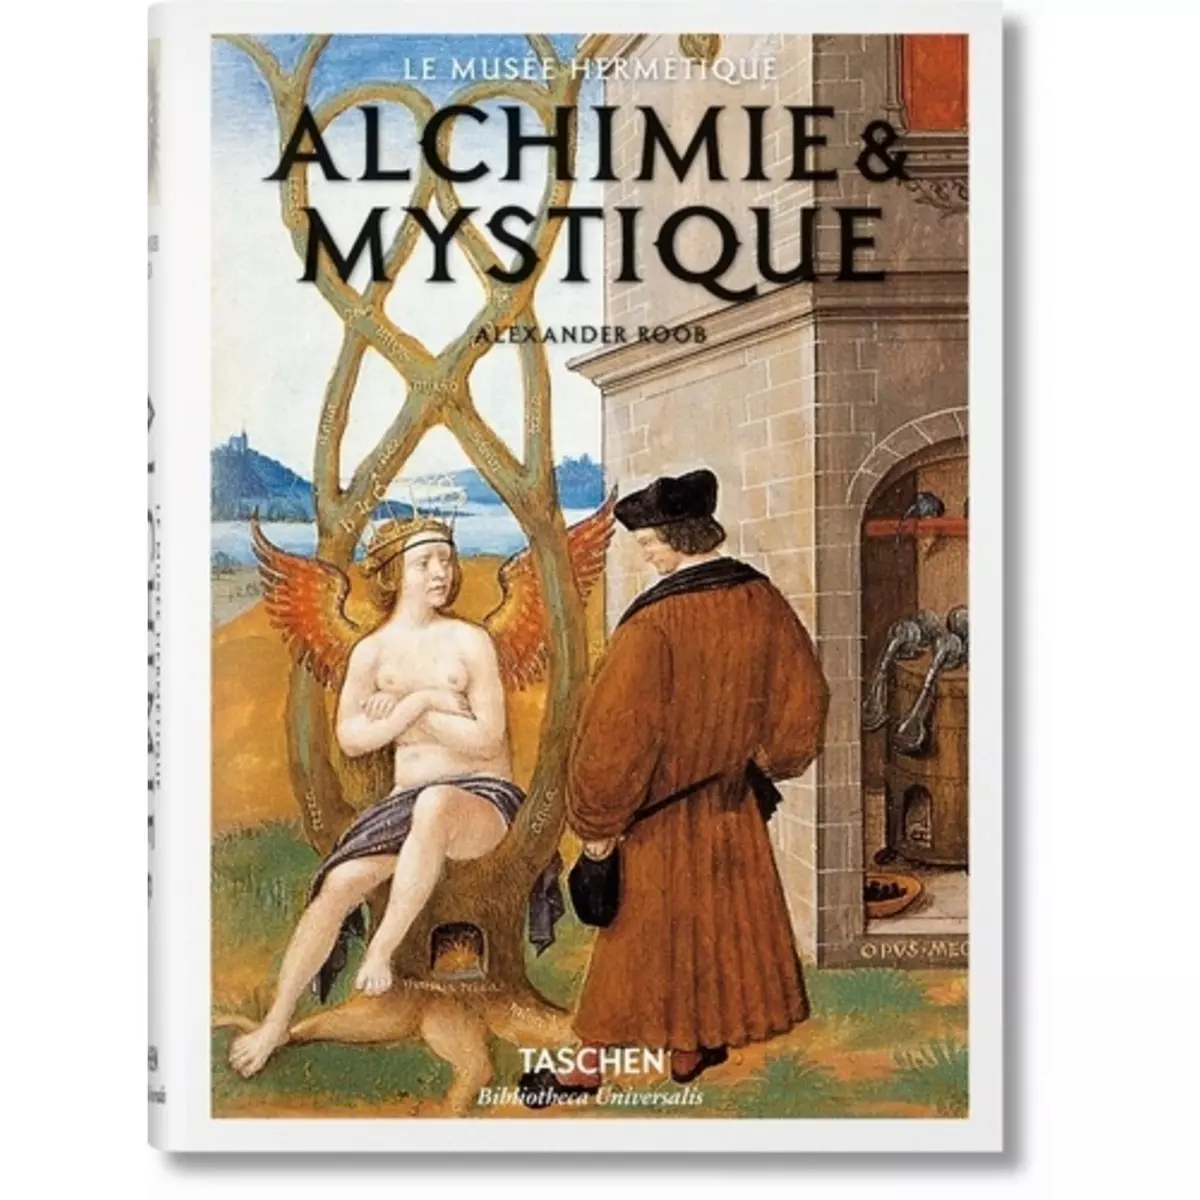  ALCHIMIE & MYSTIQUE. LE MUSEE HERMETIQUE, Roob Alexander